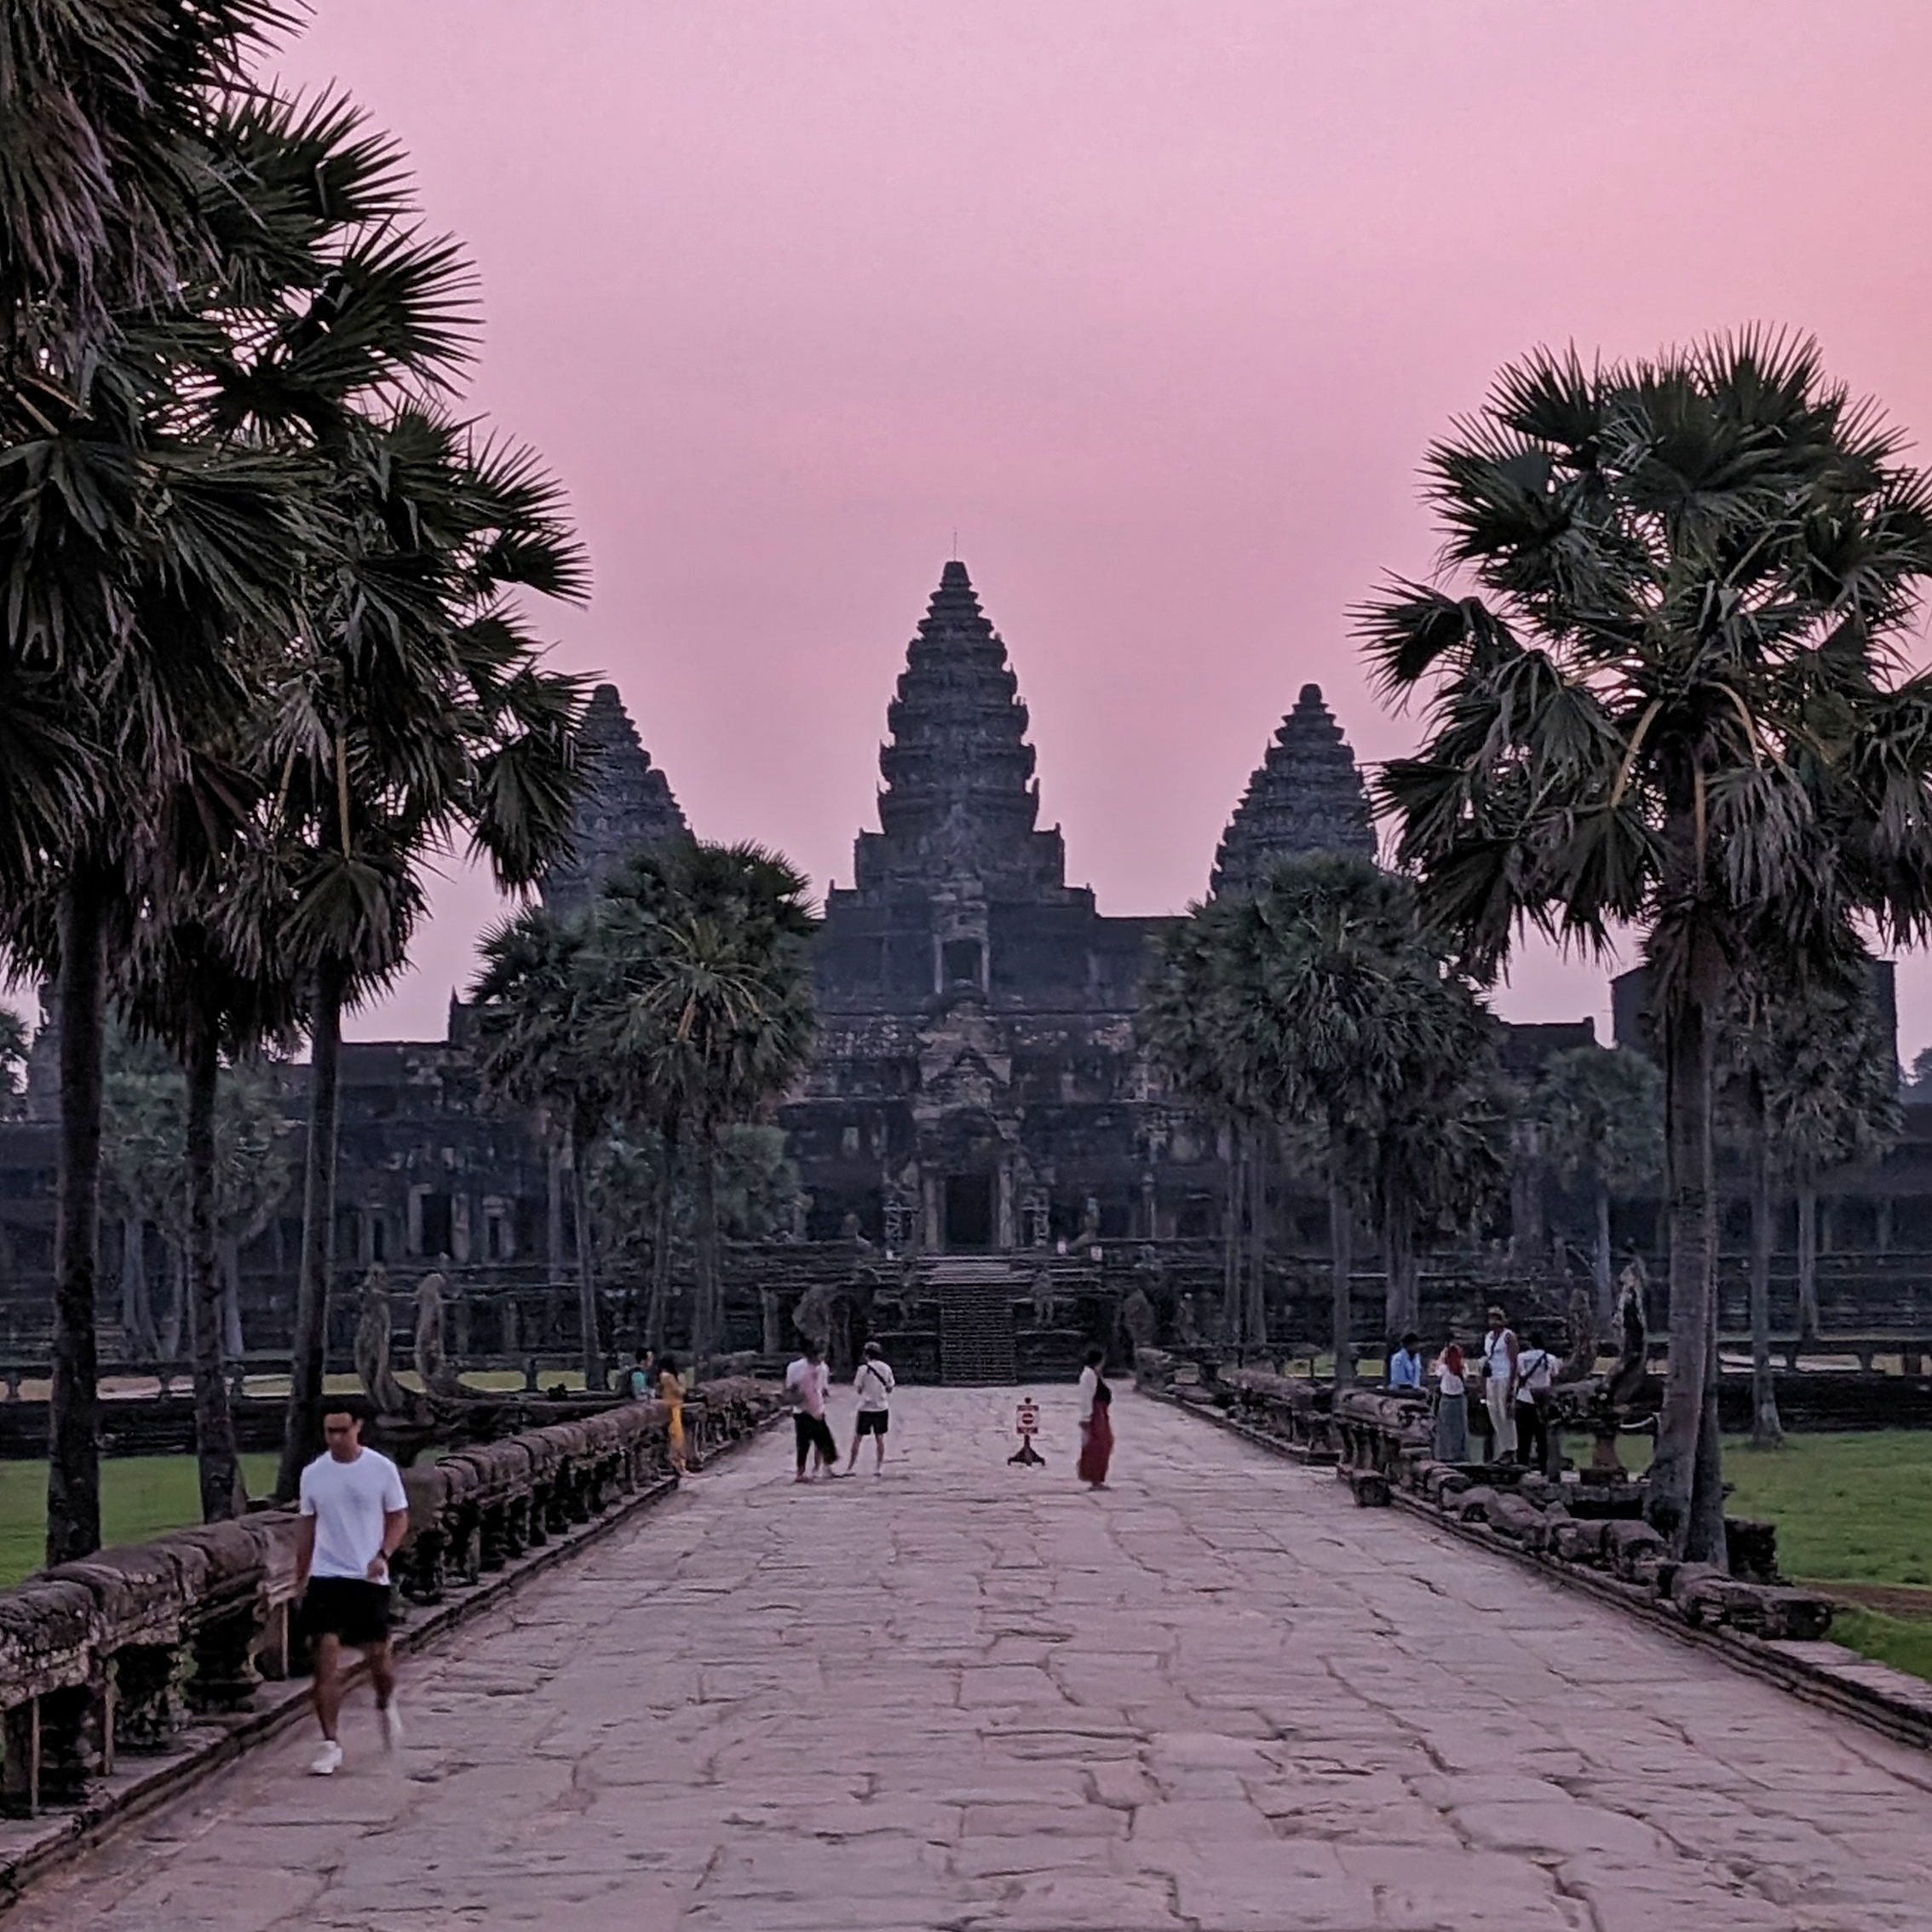 Park Hyatt Siem Reap Angkor Wat Sunrise Tour